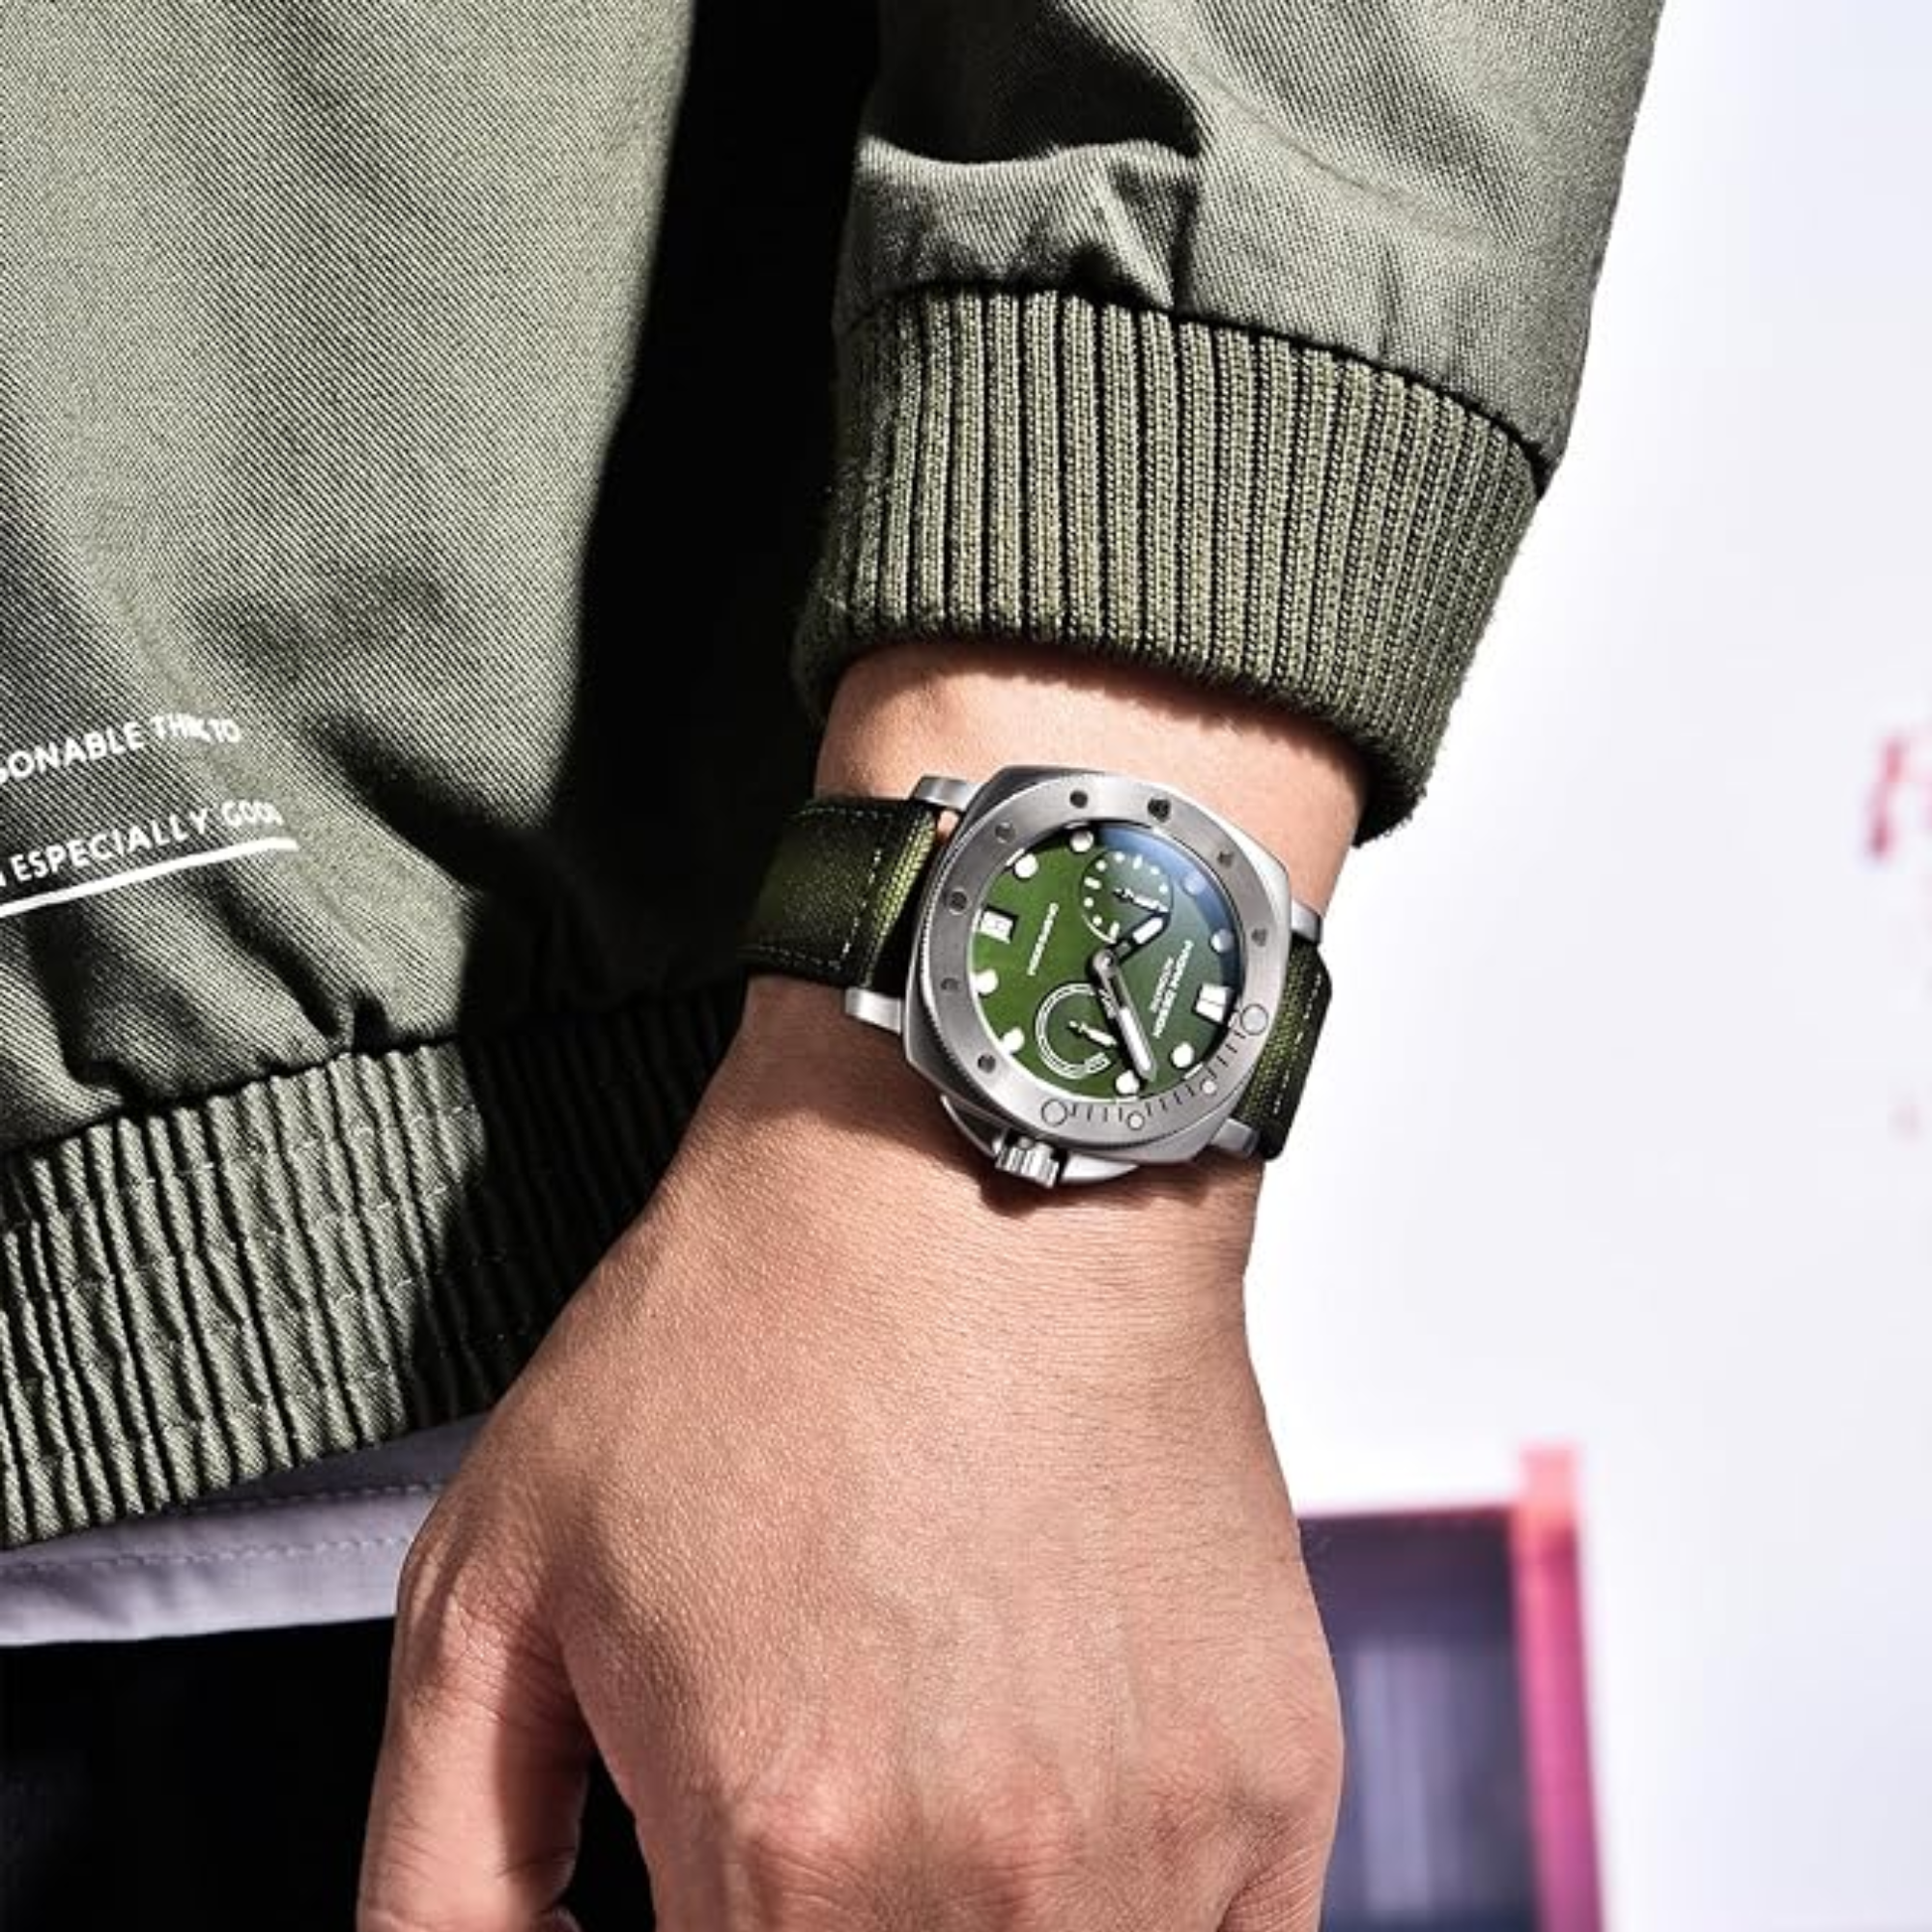 Pagani Design PD-1767 Men's Automatic Watch Waterproof - Military Green